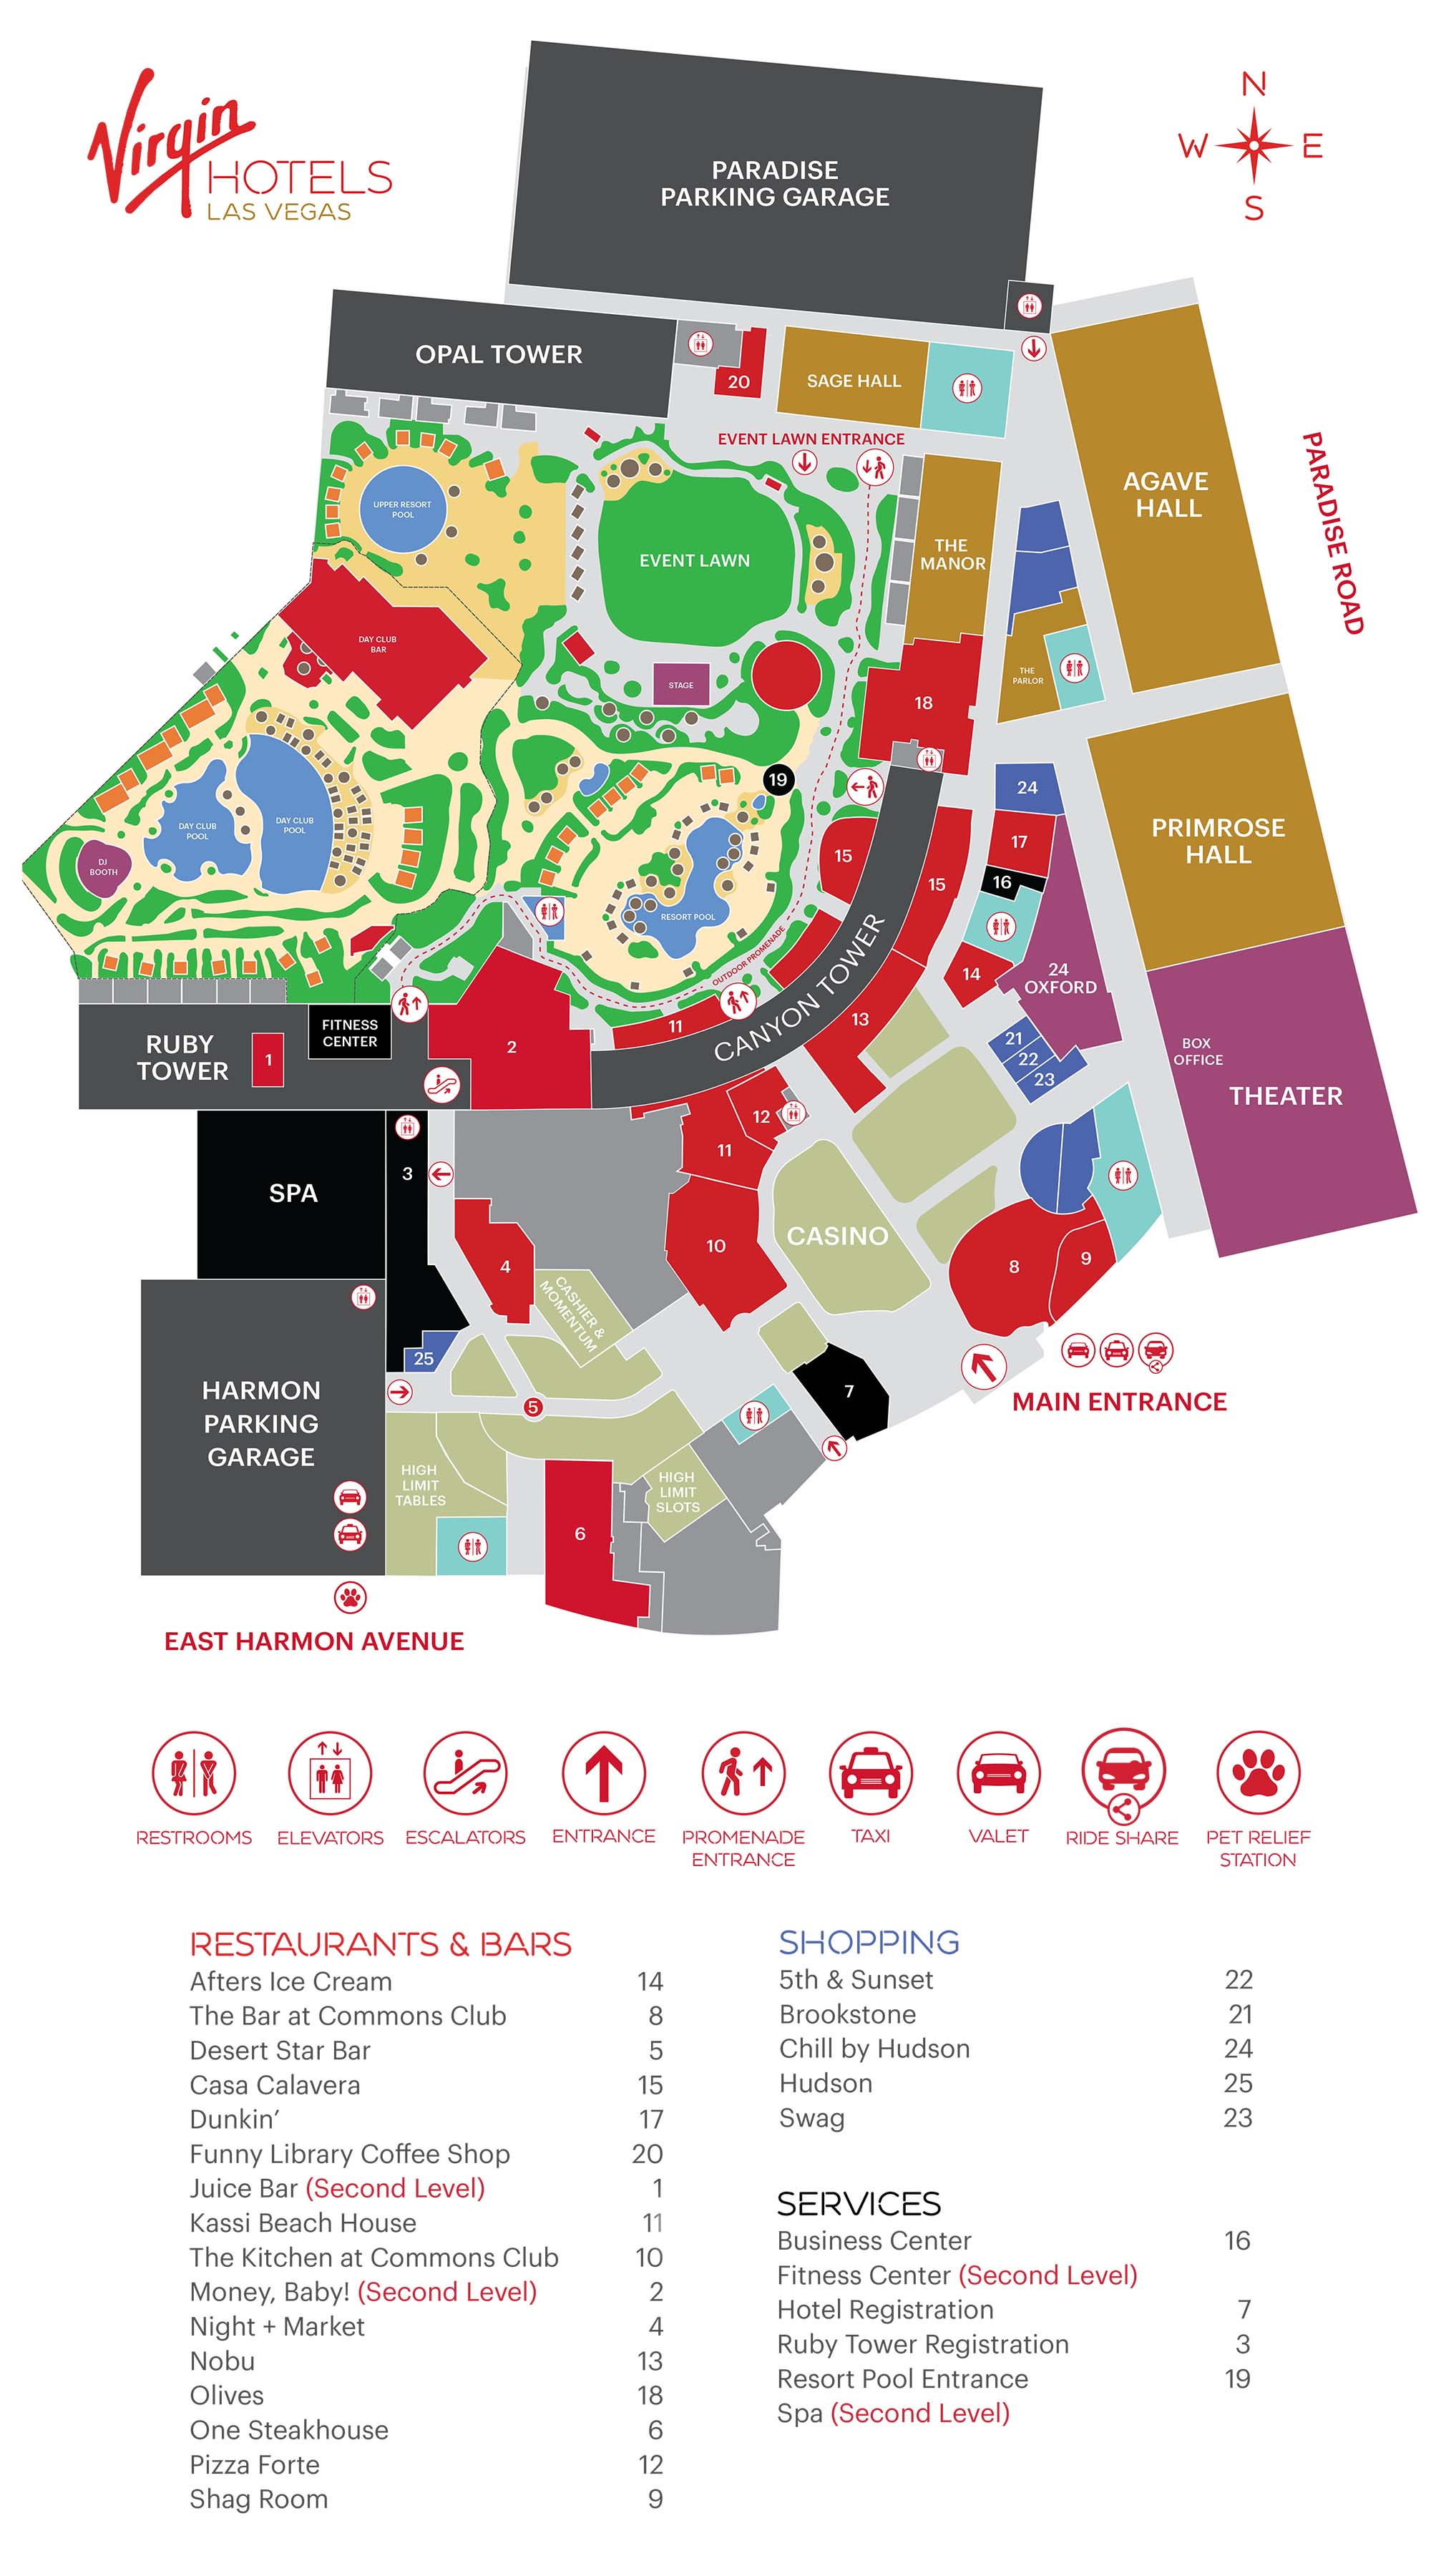 Virgin Las Vegas Casino Property Map & Floor Plans Las Vegas